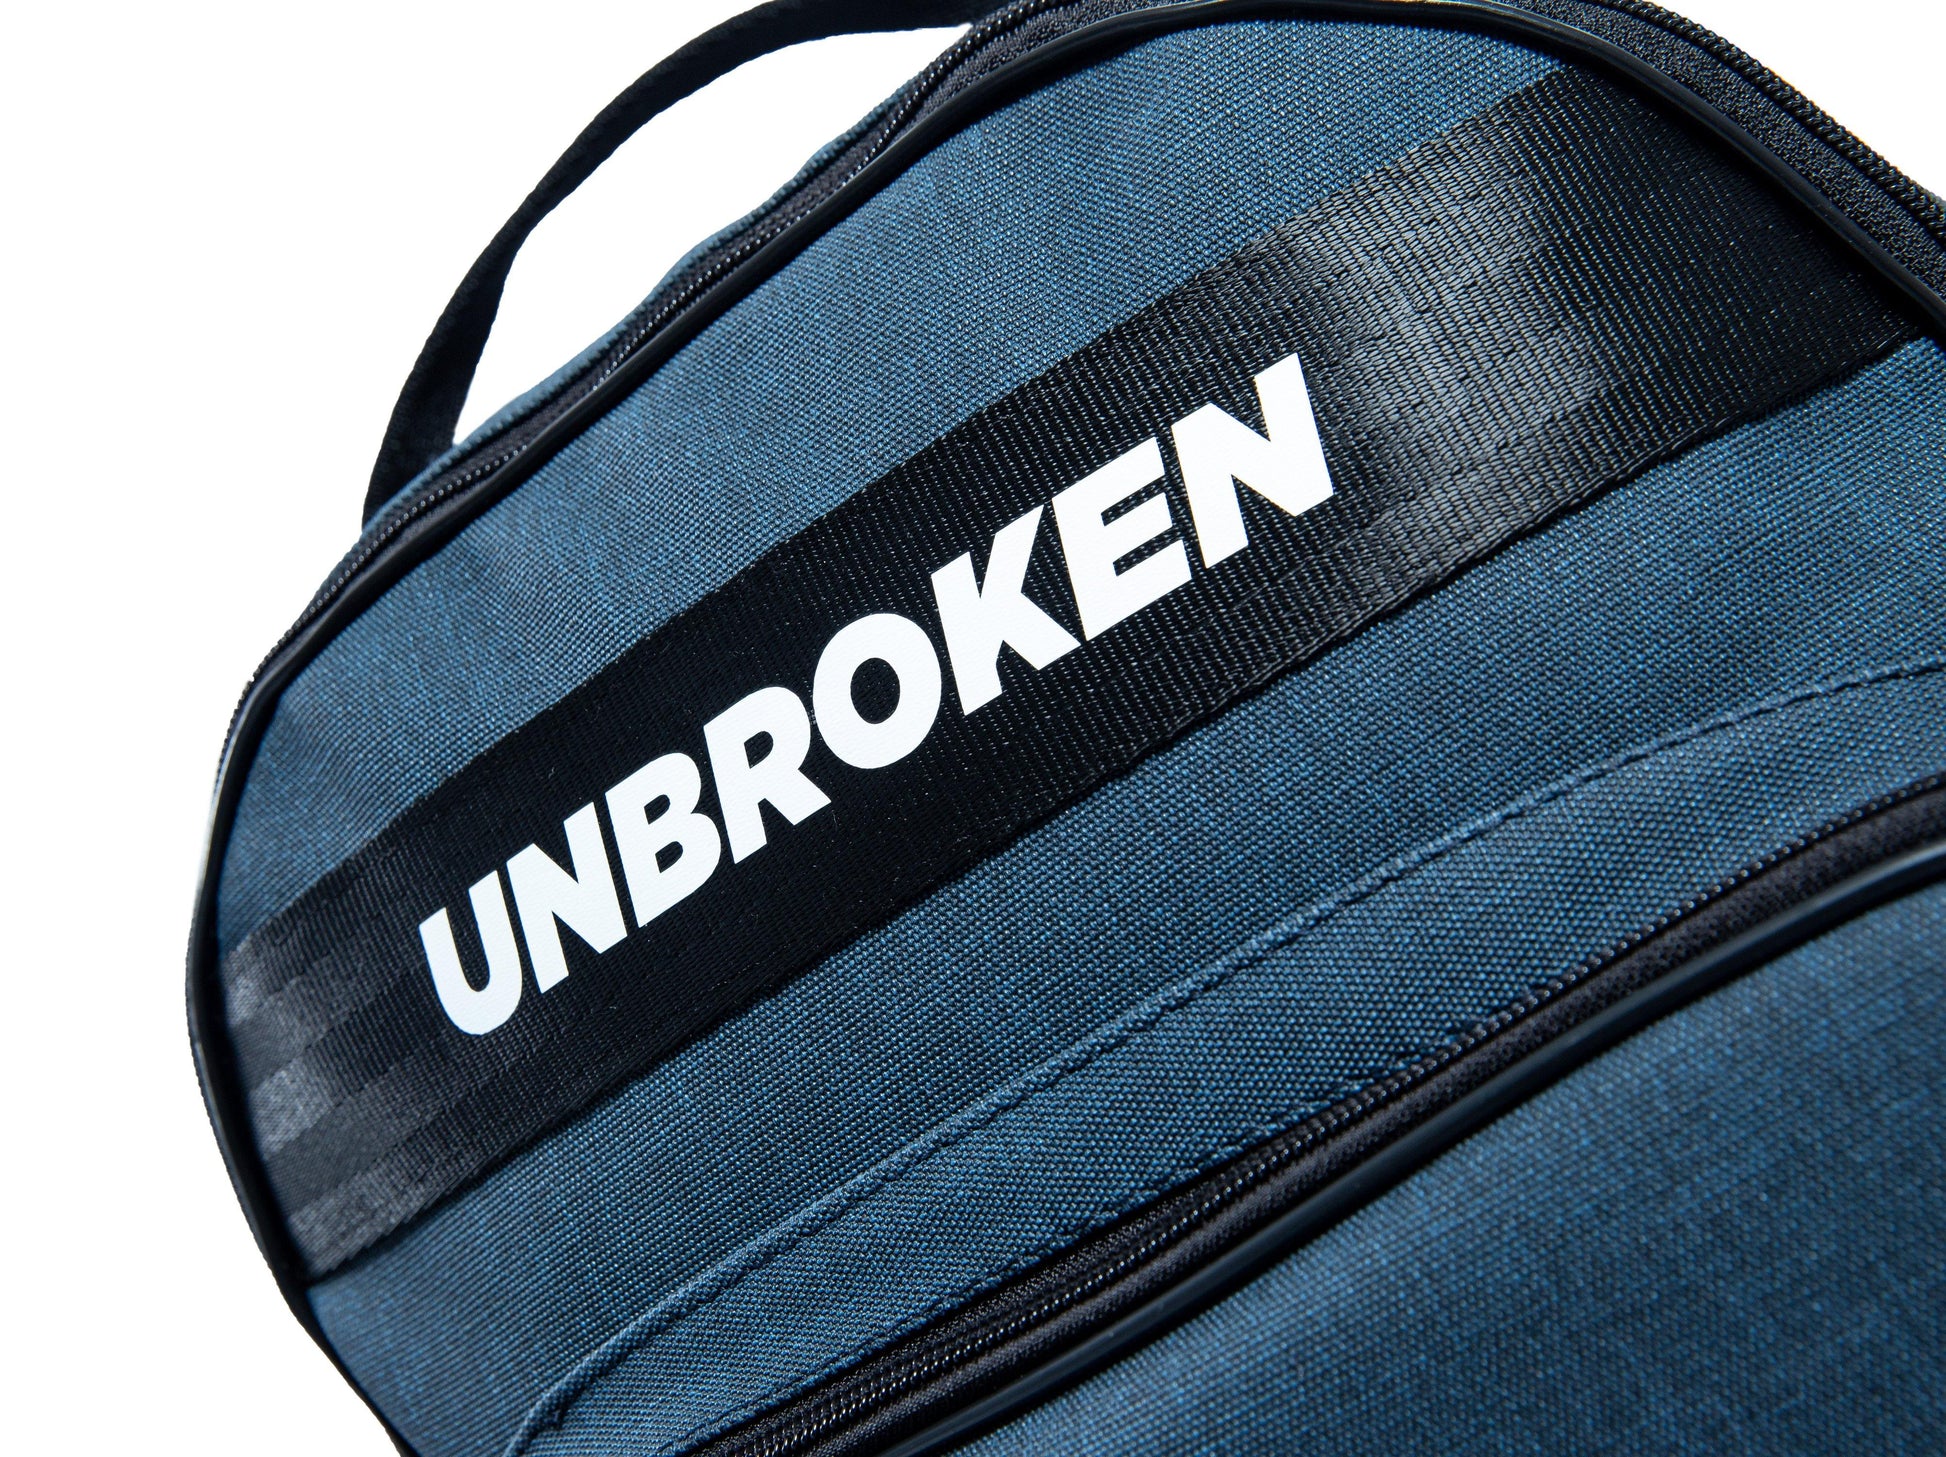 Morral Azul - backpack deportivo unbroken